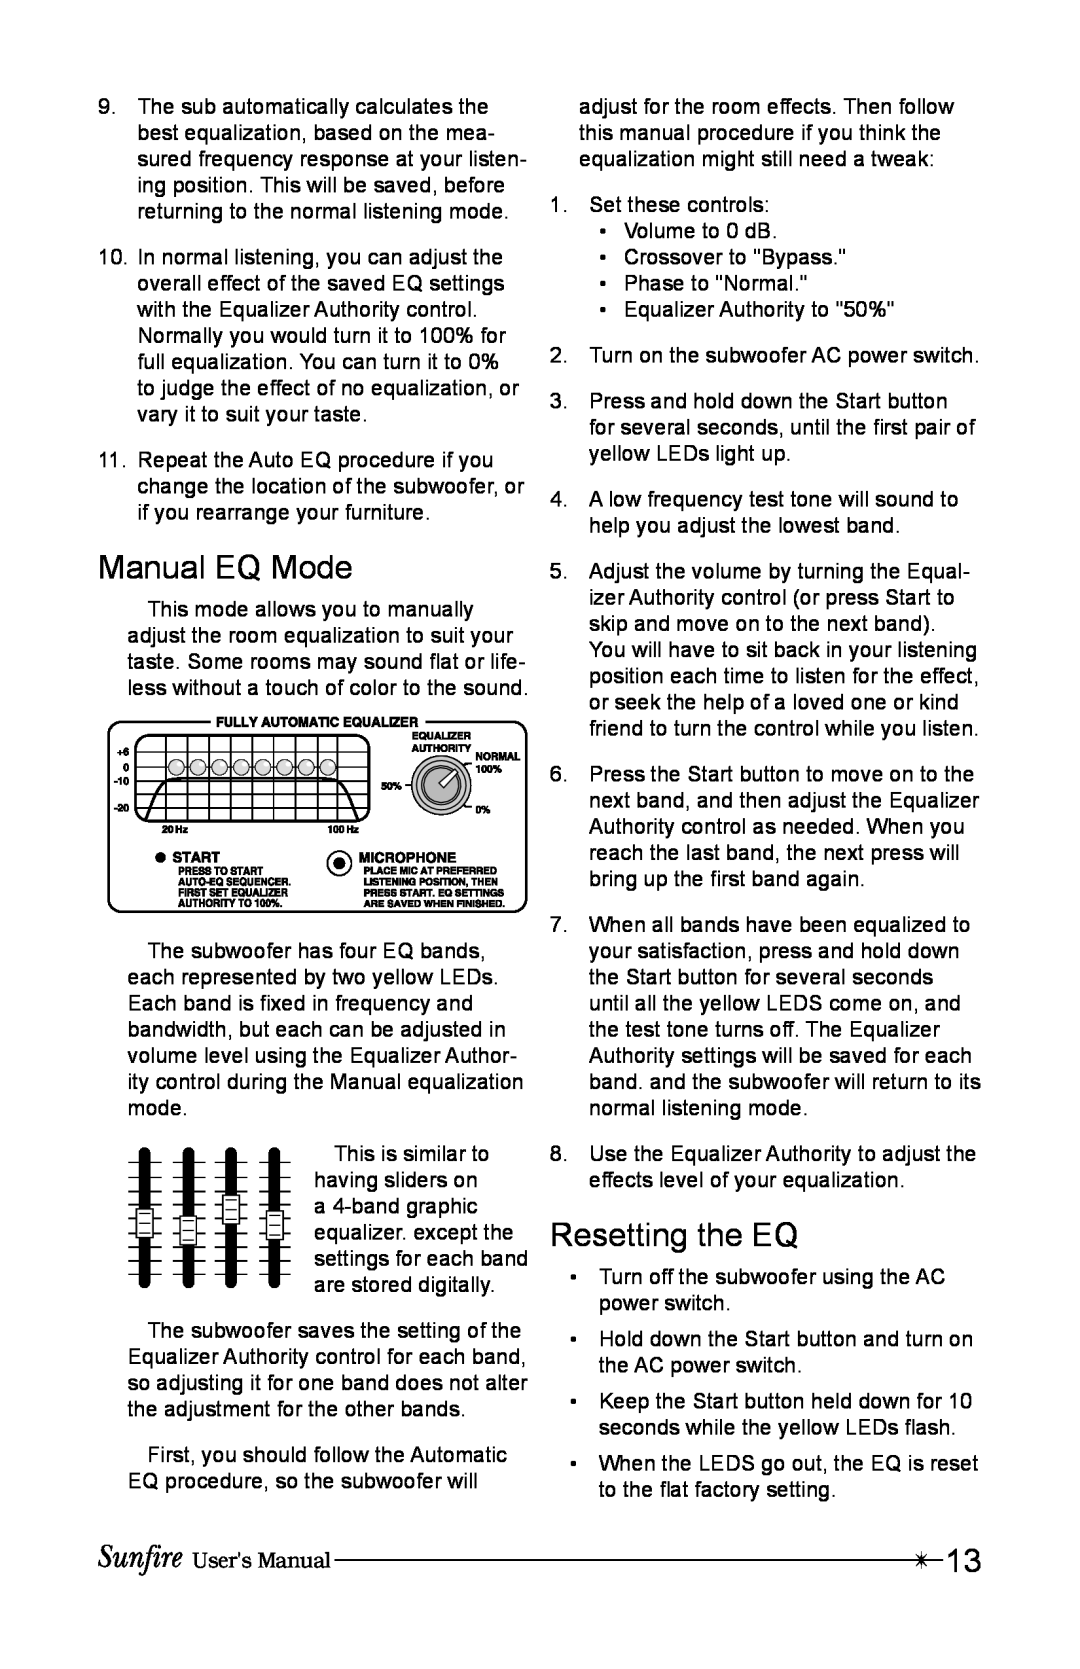 Sunfire 12 user manual Manual EQ Mode, Resetting the EQ 